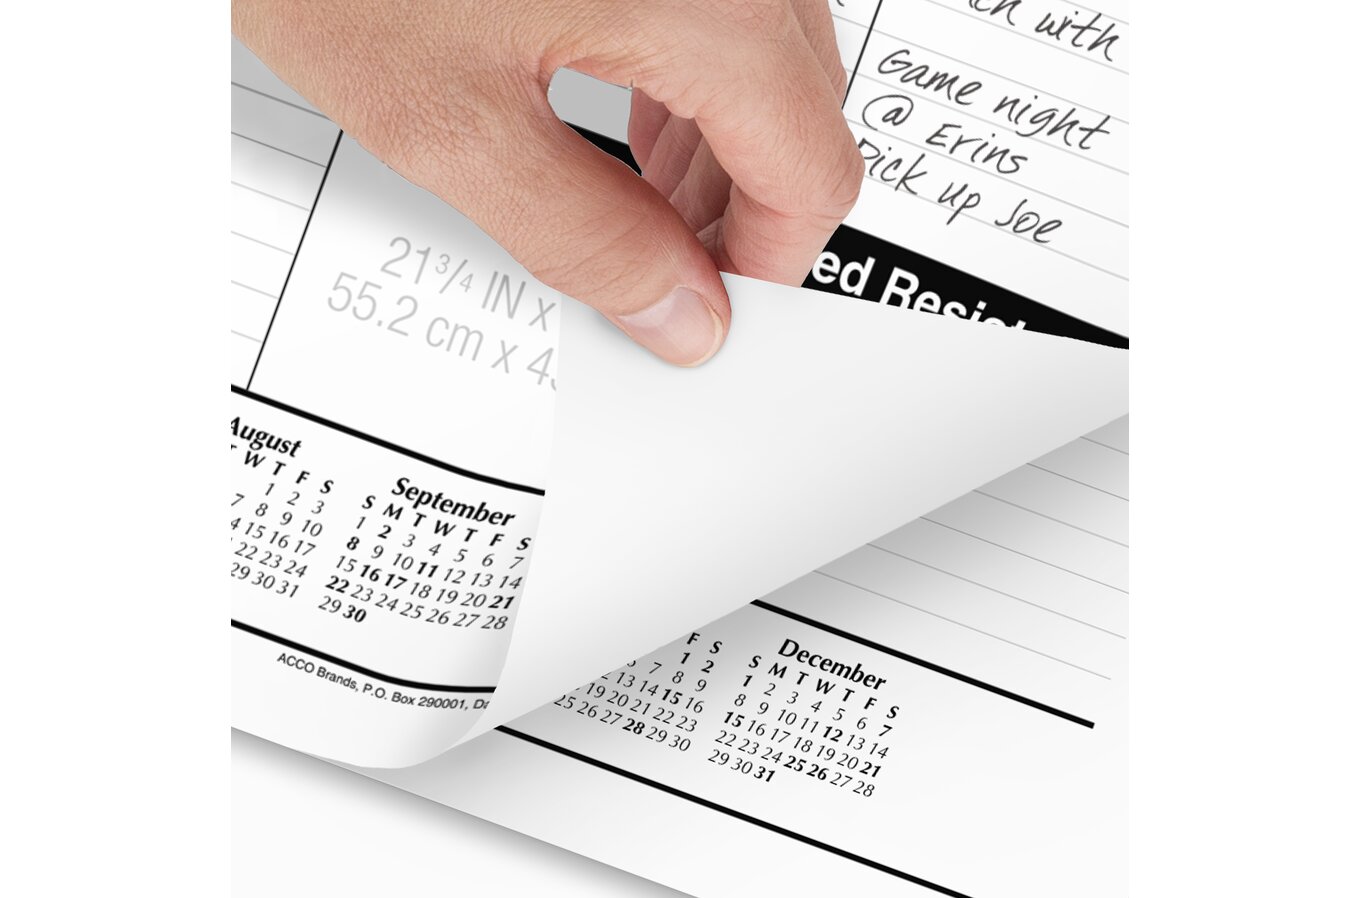 AT-A-GLANCE 2024 Monthly Desk Pad Calendar Standard 21 34 x 17 - Desk Pad 